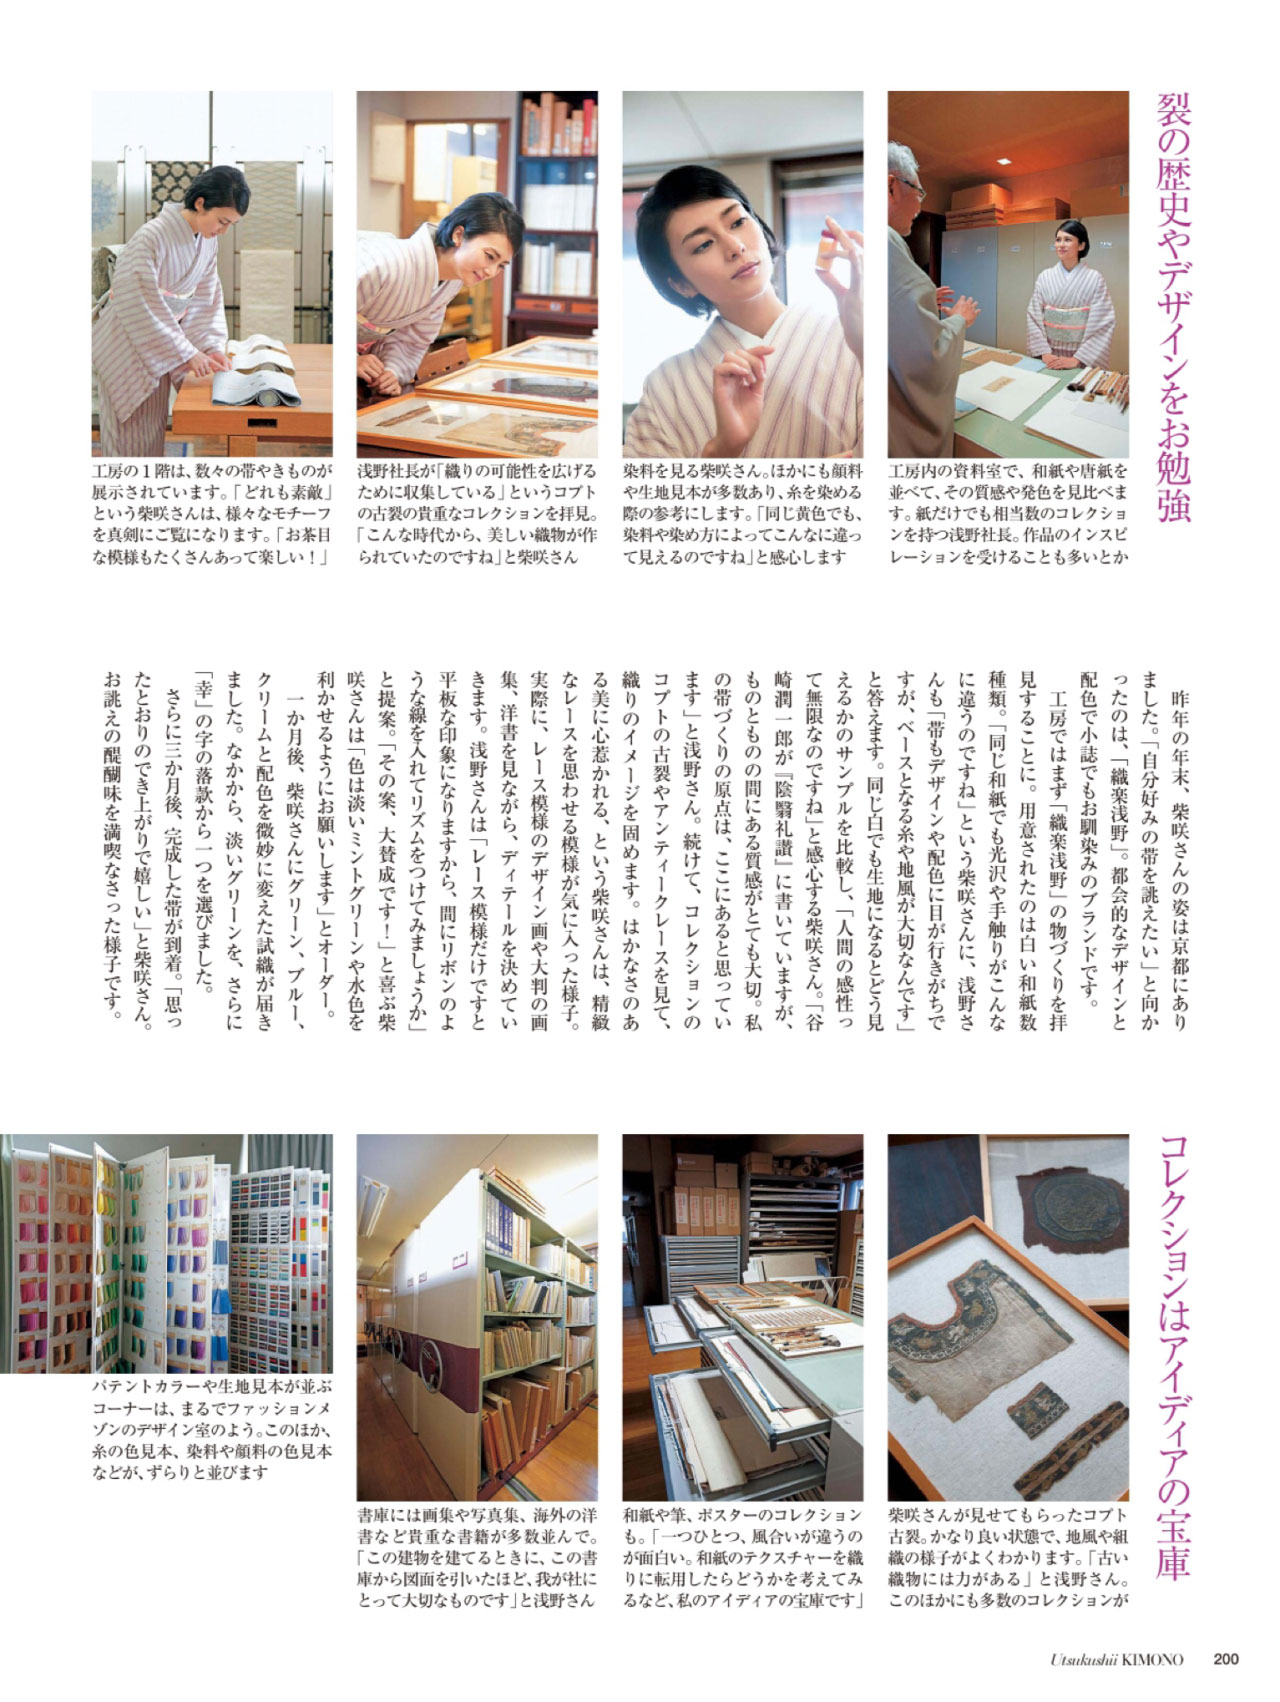 Ko Shibasaki Japanese Utsukushii Kimono Magazine